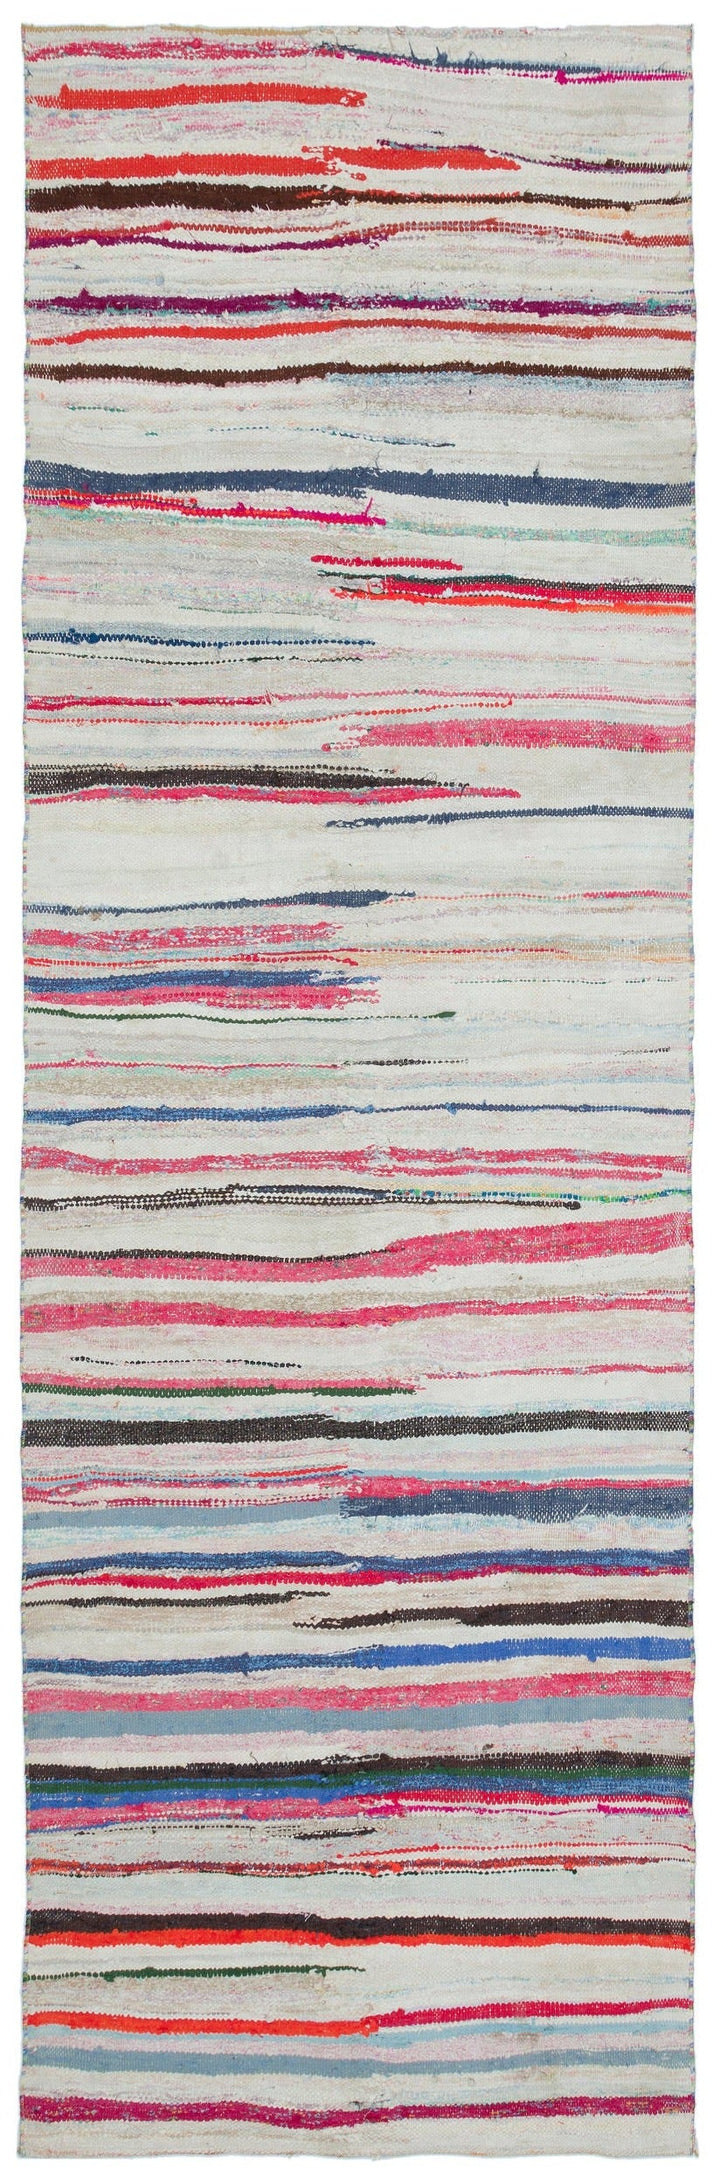 Cretan Beige Striped Wool Hand-Woven Carpet 103 x 325